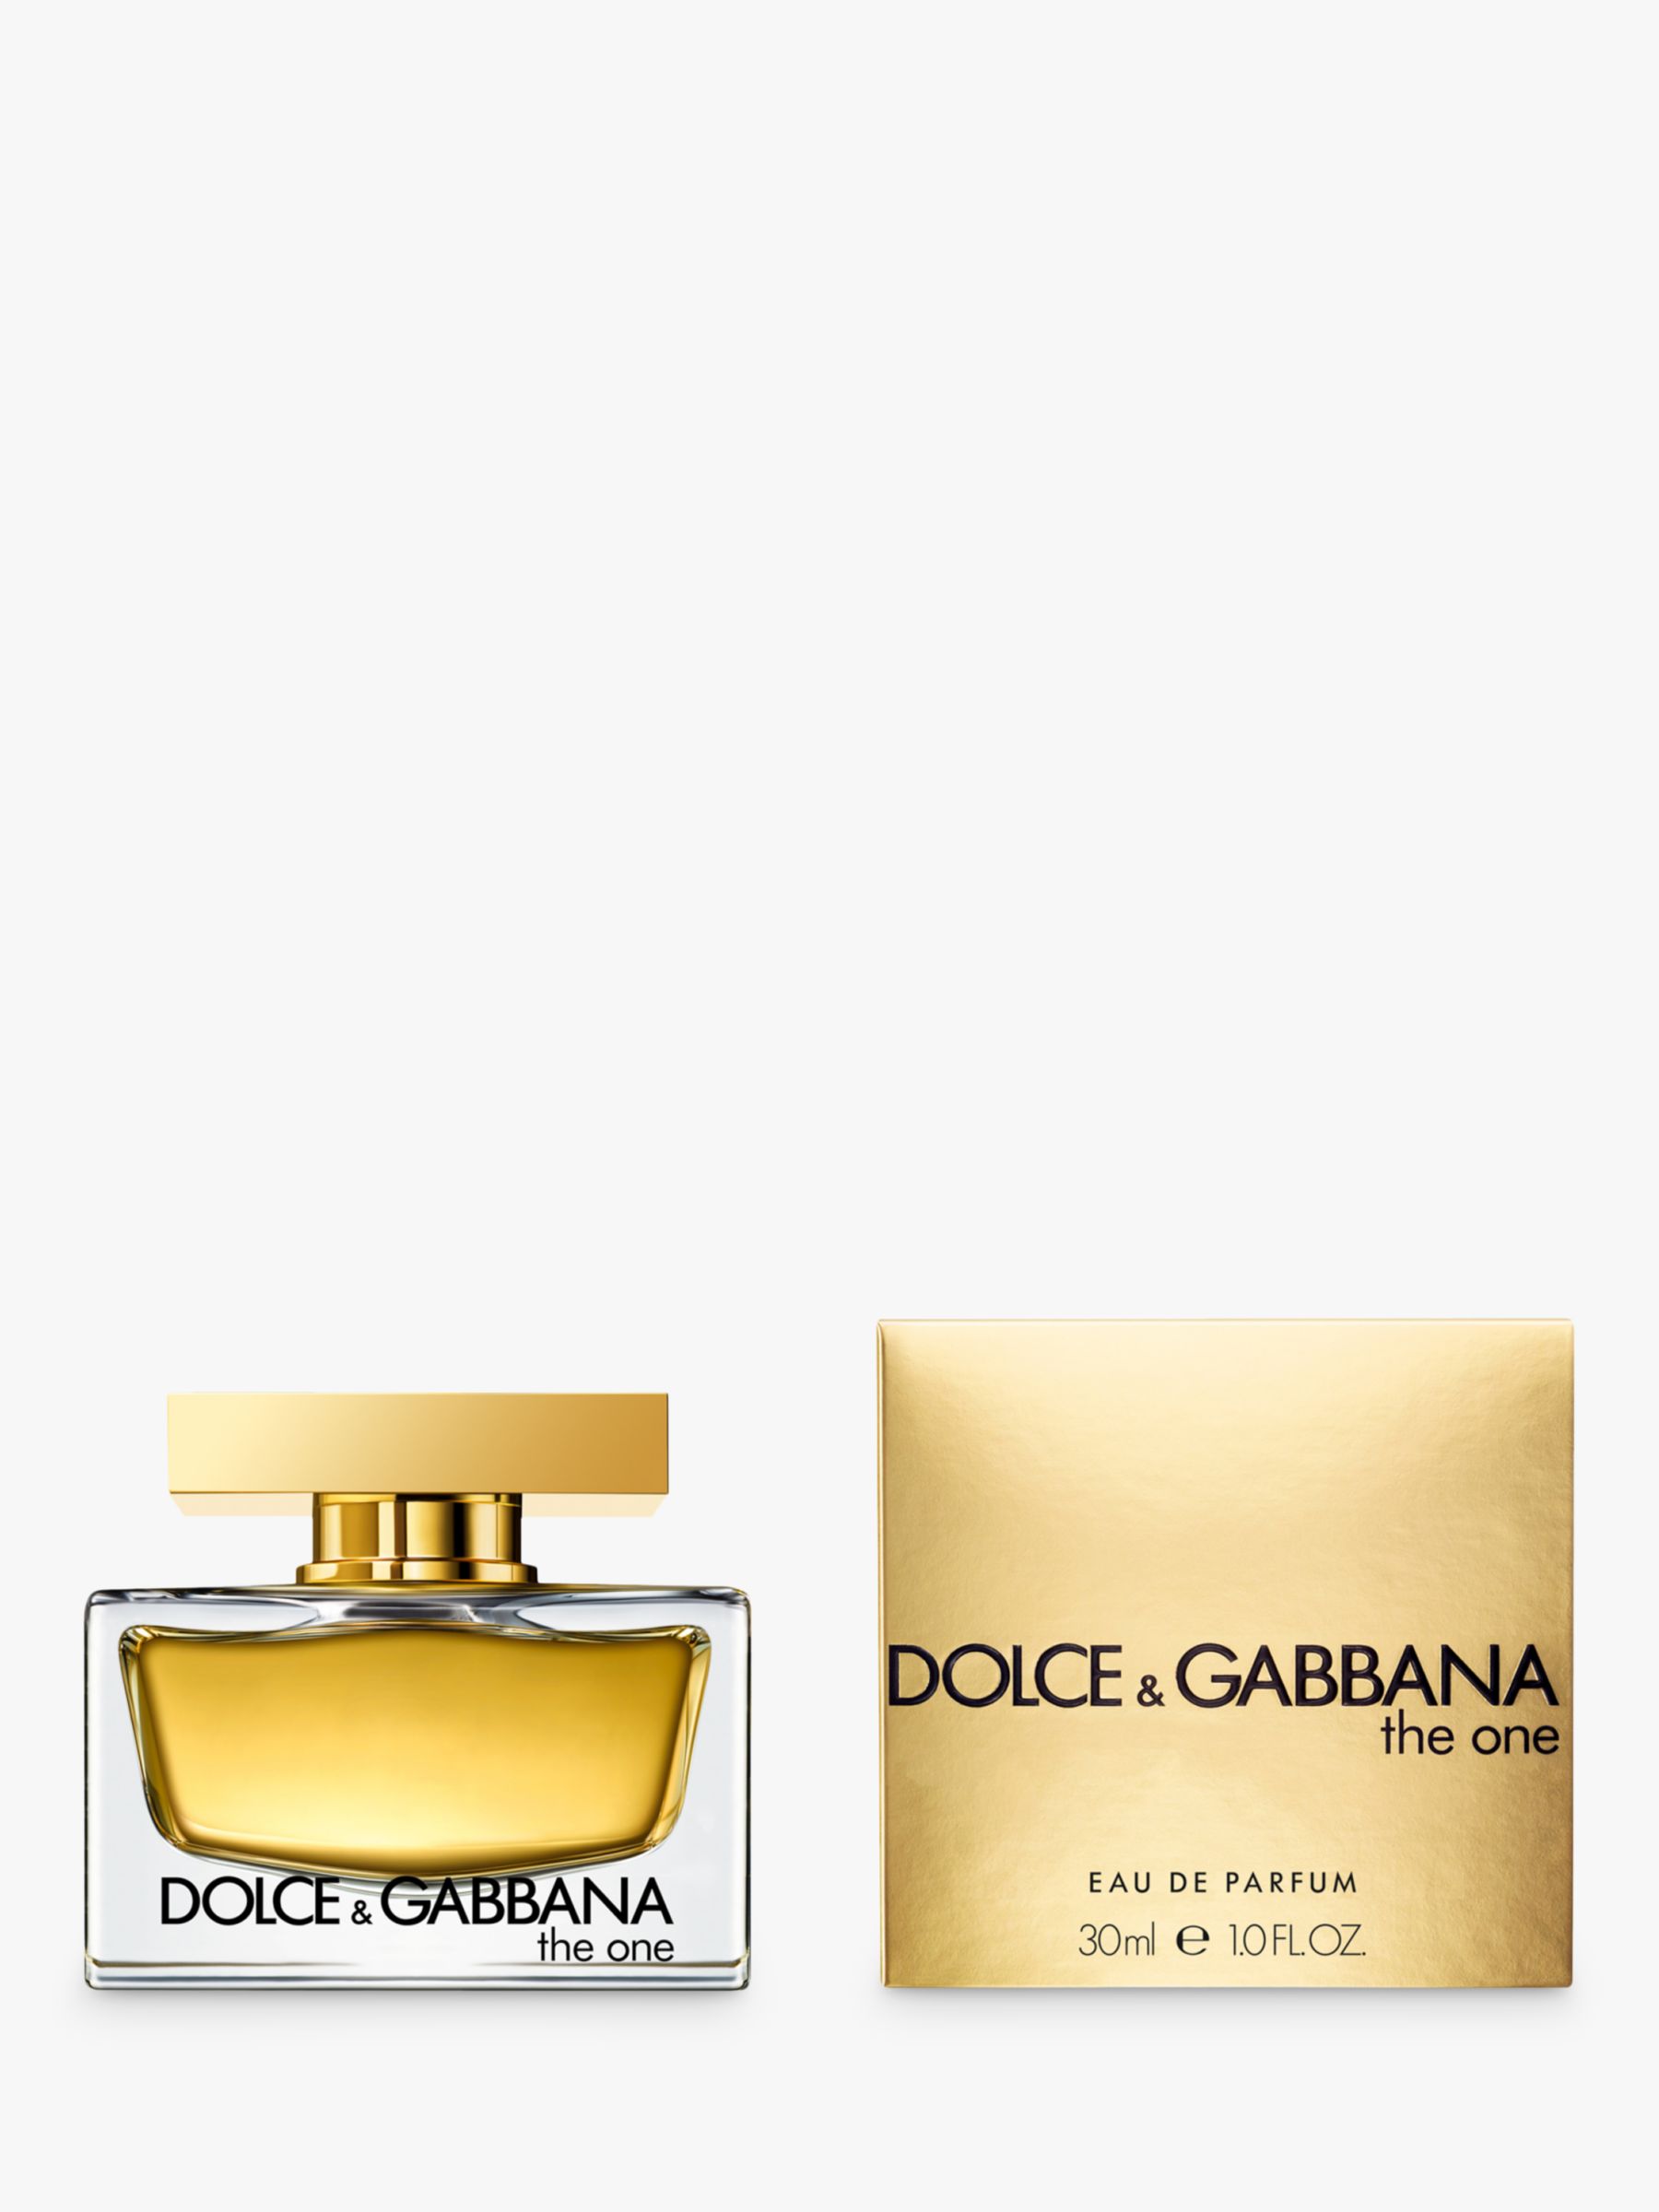 Dolce & Gabbana The One Eau de Parfum, 50ml 2